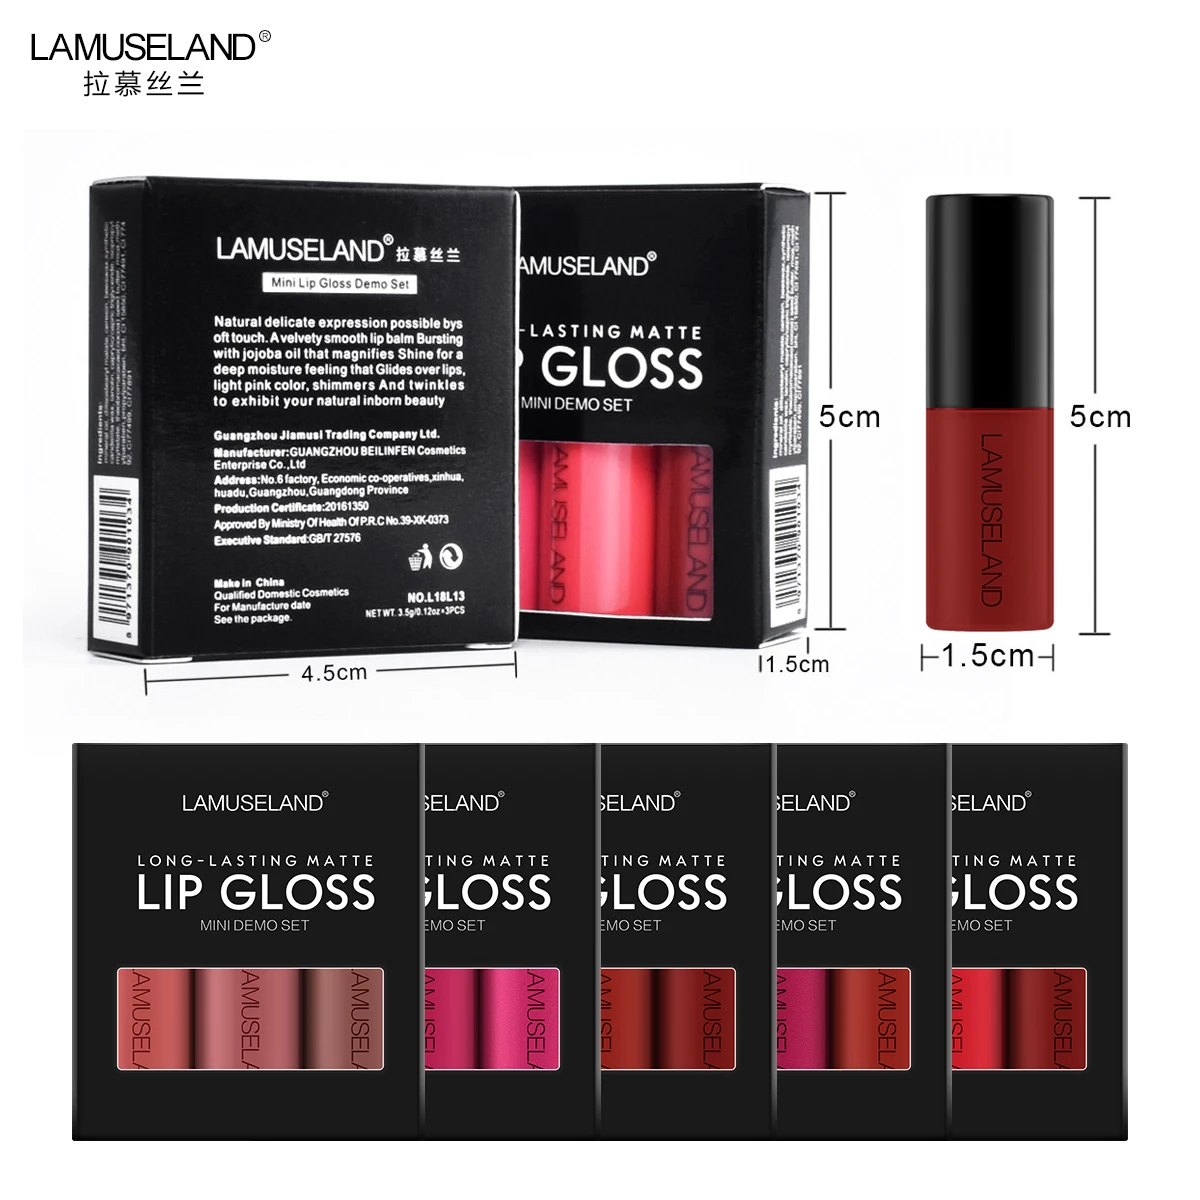 3Pcs/Lot Waterproof Long-Lasting Matte Mini Lipstick 12 Colors Lip Gloss 3.5g Lips Makeup Brand LAMUSELAND#L18L13